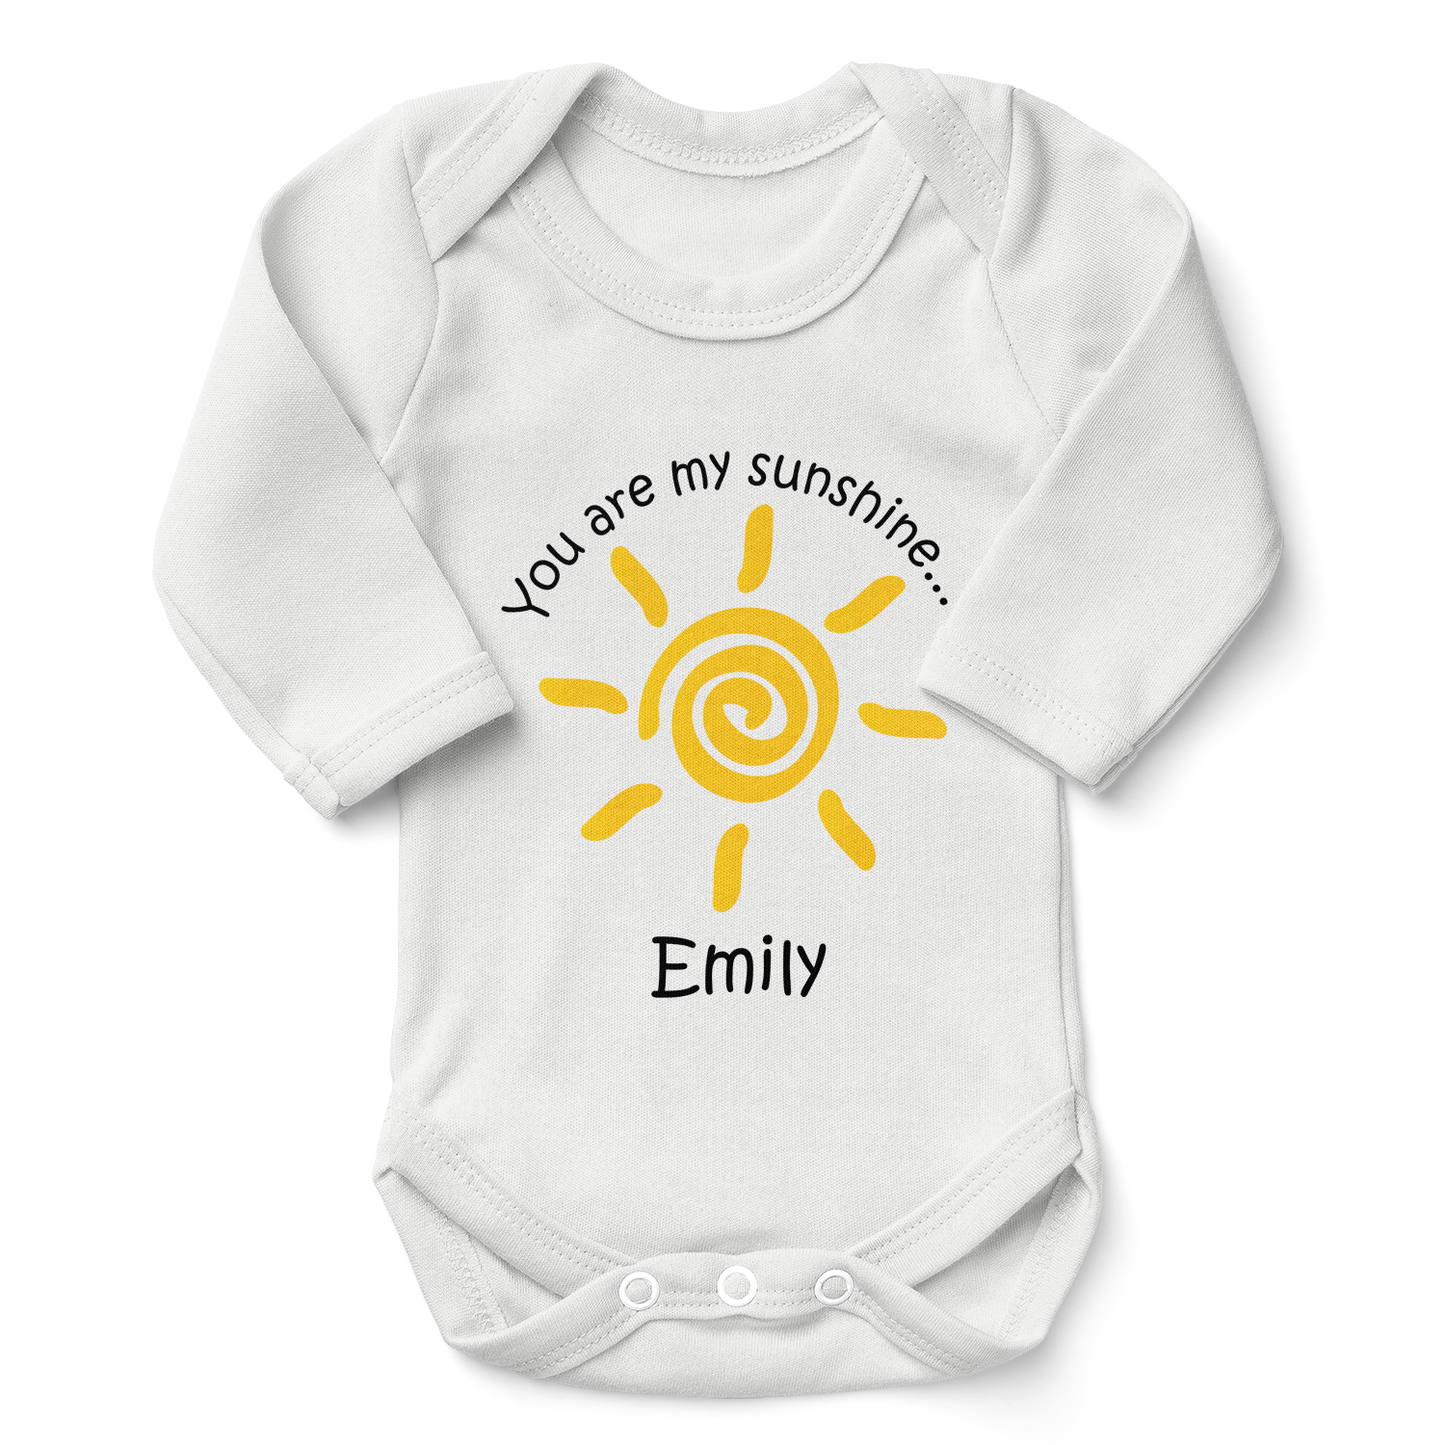 Personalized Organic Baby Bodysuit - You Are My Sunshine (White / Long Sleeve)